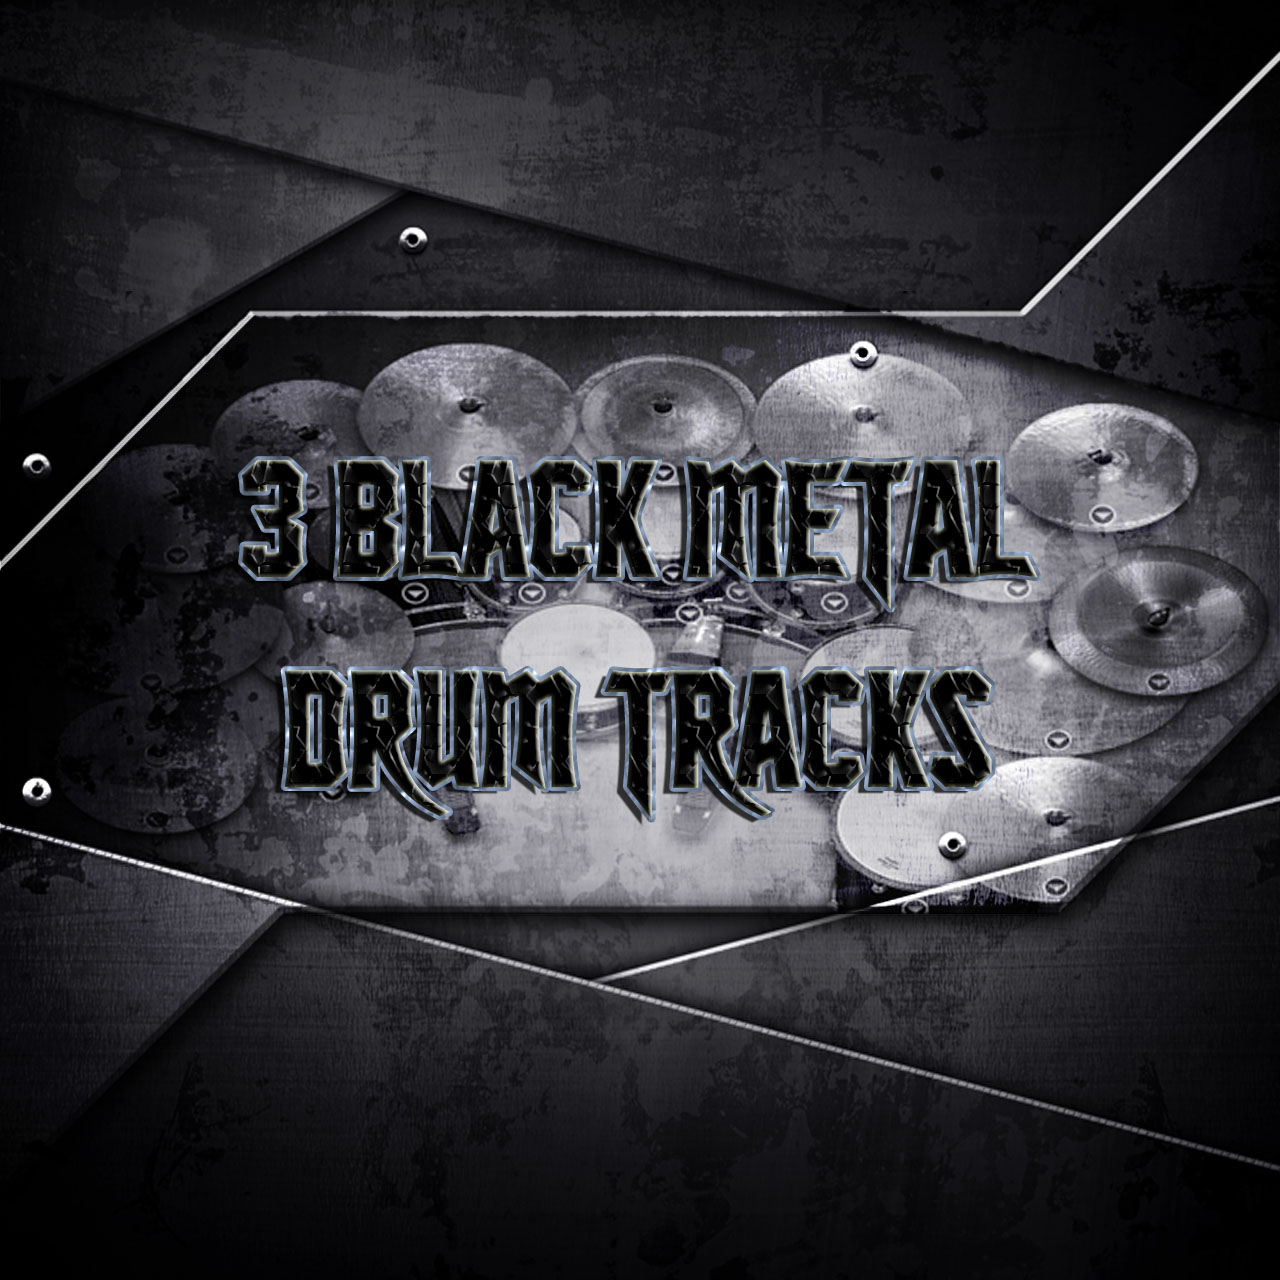 metal songs midi tracks